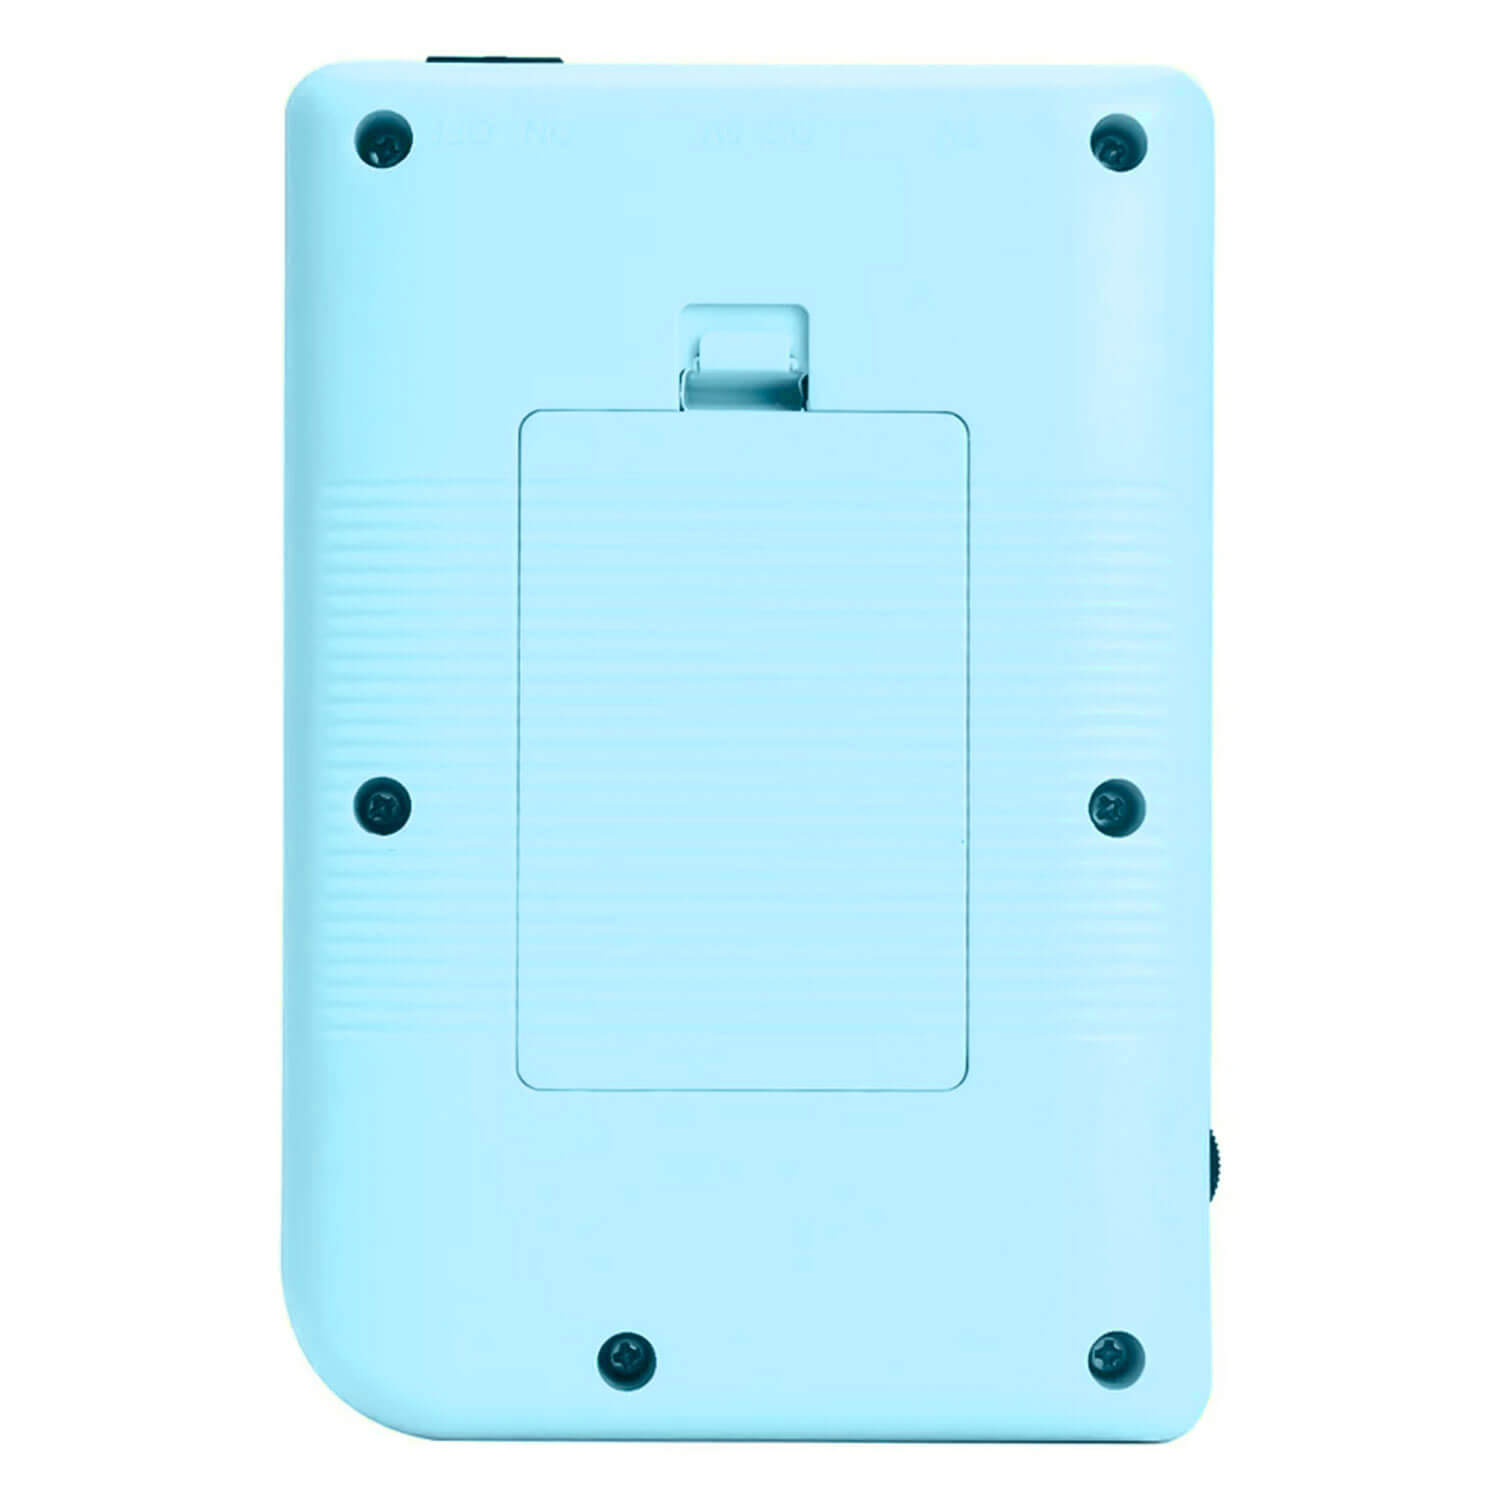 Console Portátil Game Boy Game Box Plus 500 Jogos - Azul